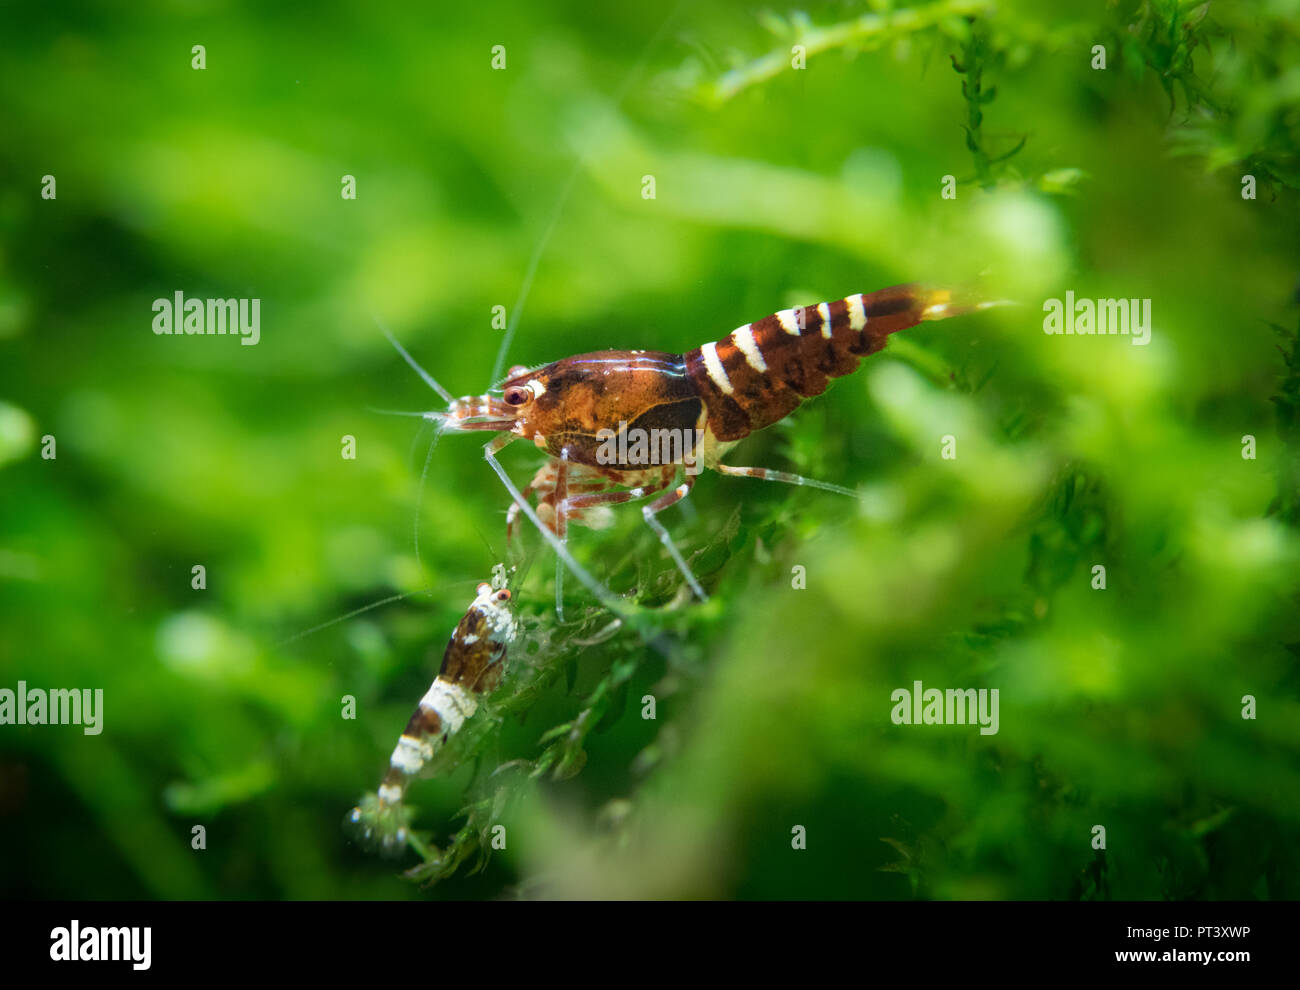 Zebra pinto shrimp with baby shrimp standing on aquatic moss in freshwater aquarium Stock Photo